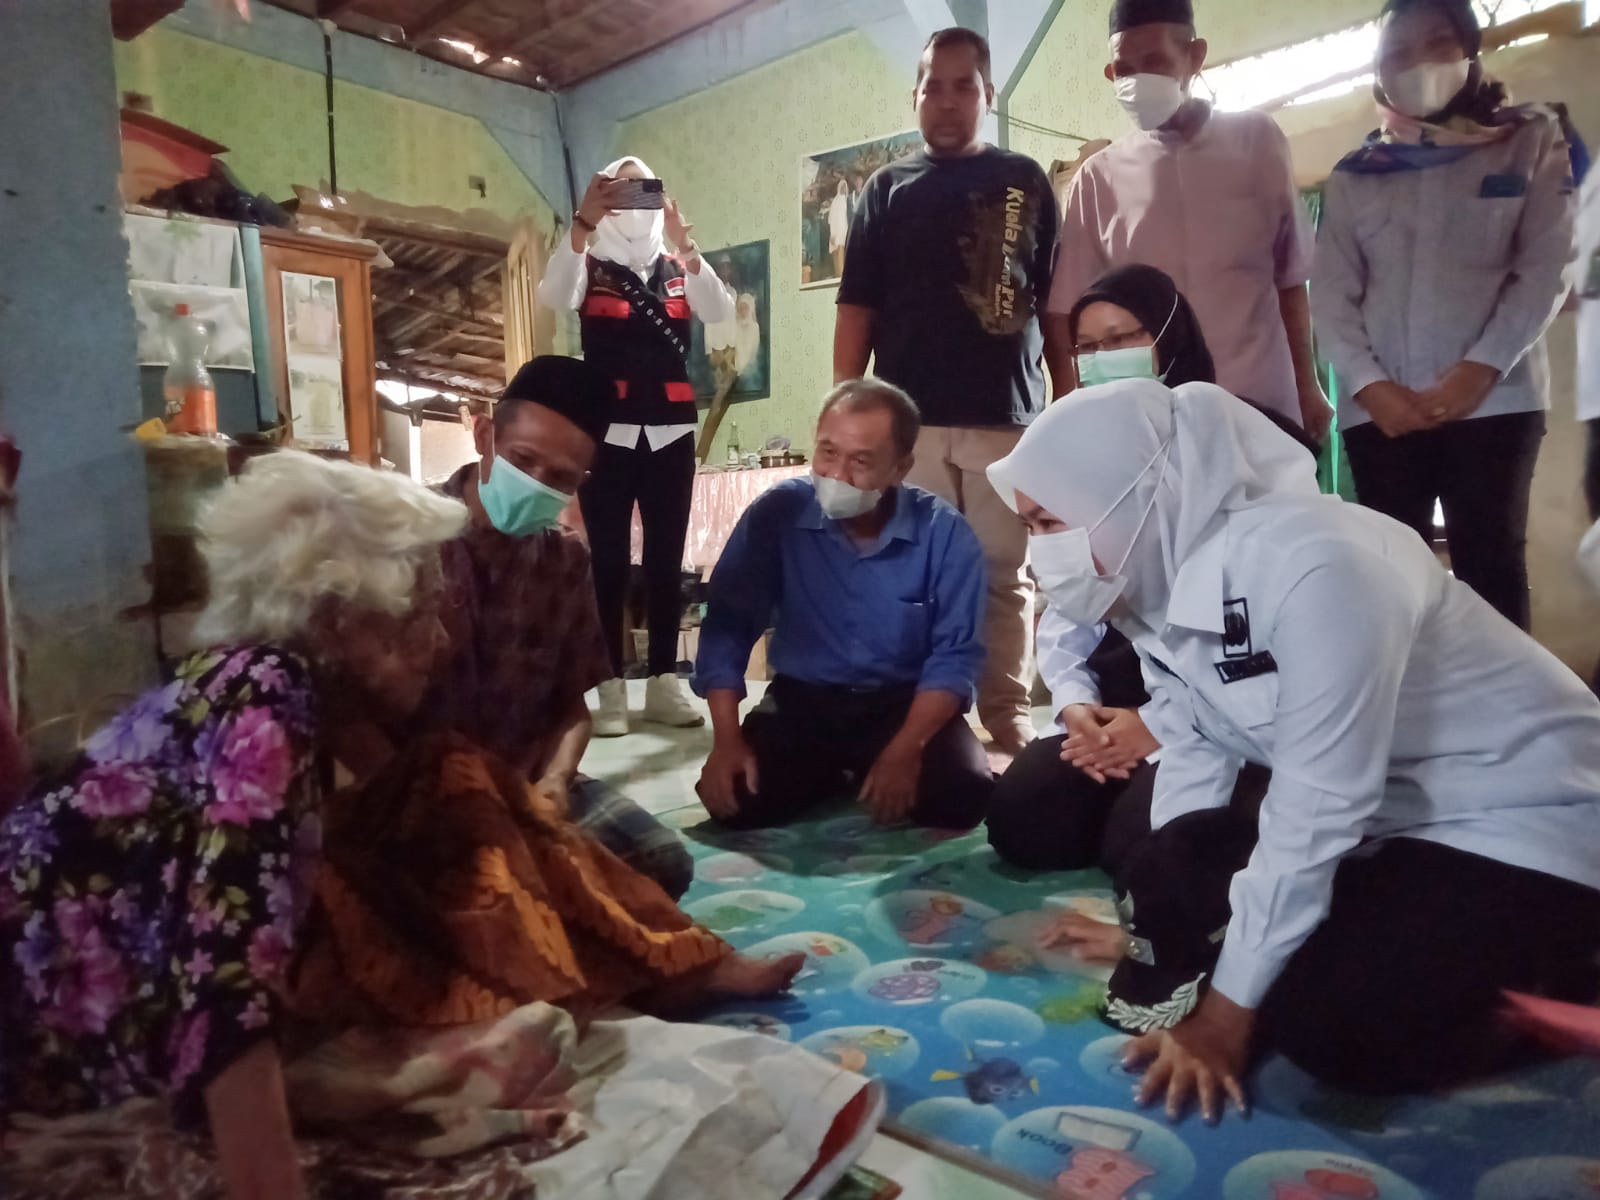 Nenek Siti Kini Berusia 130 Tahun, Kondisinya Sakit